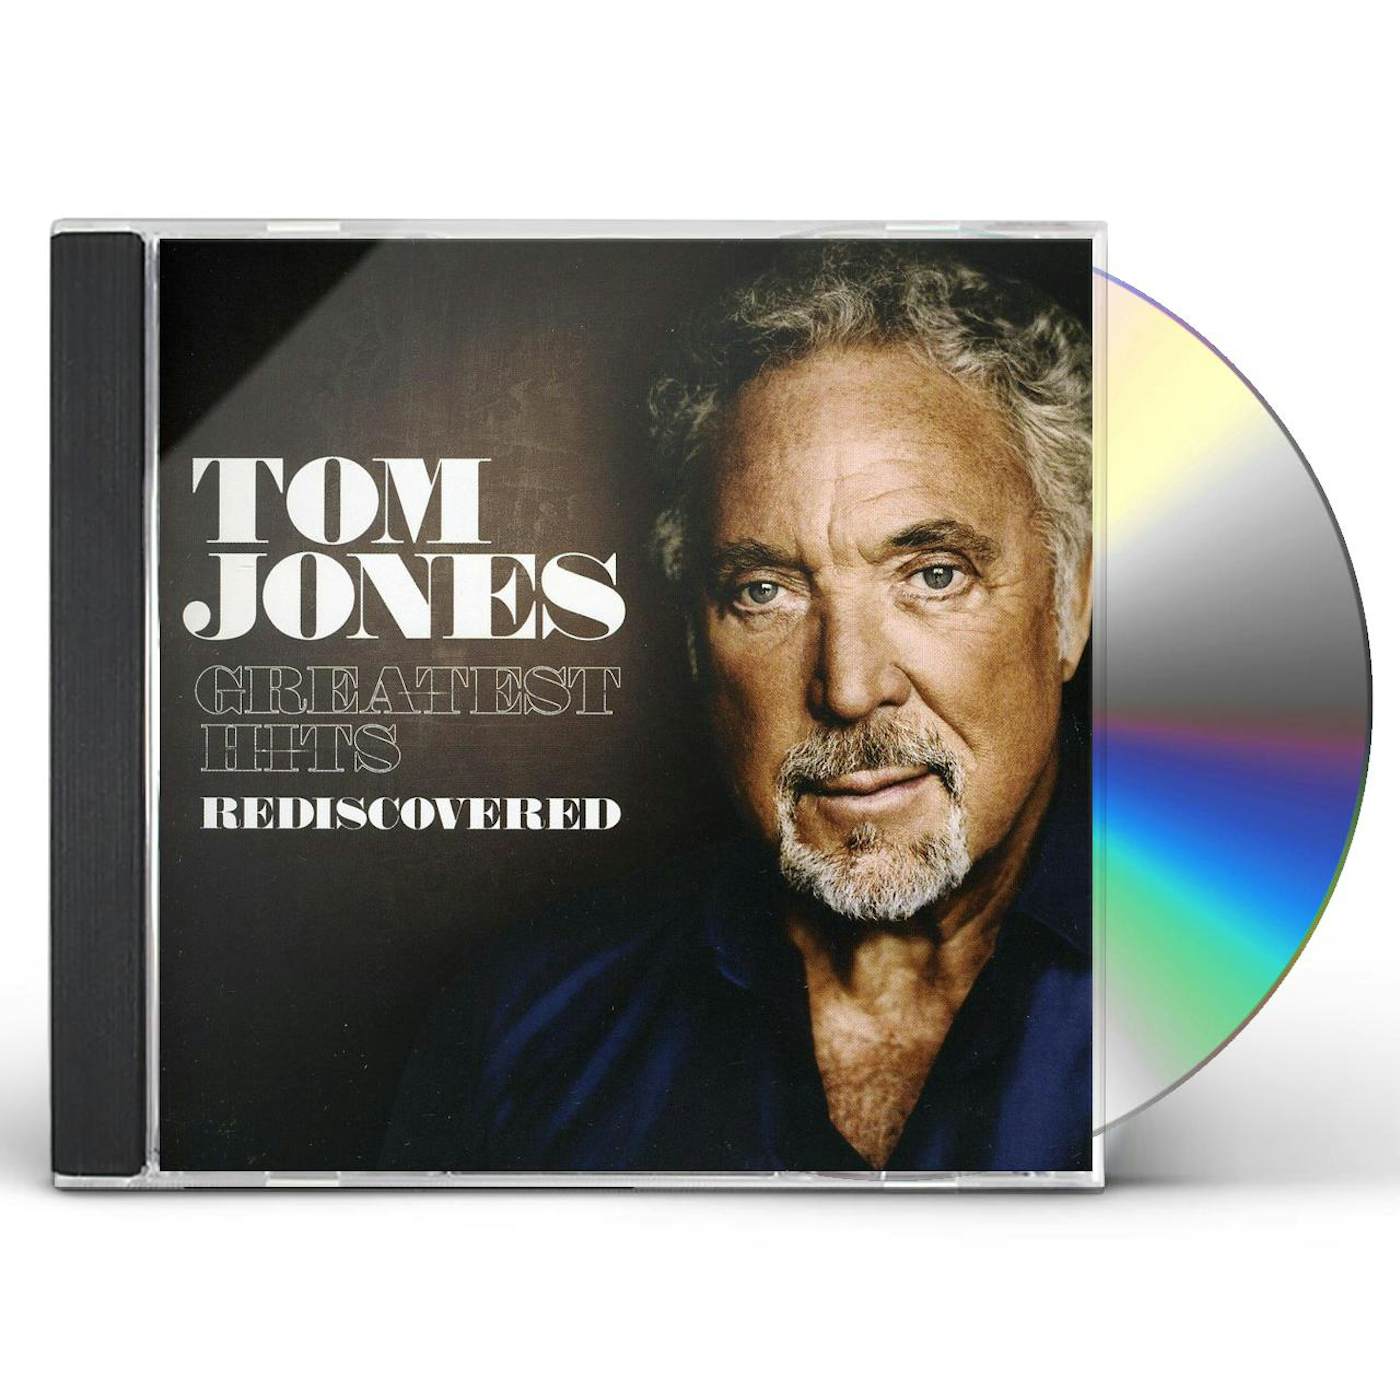 Tom Jones GREATEST HITS REDISCOVERED CD